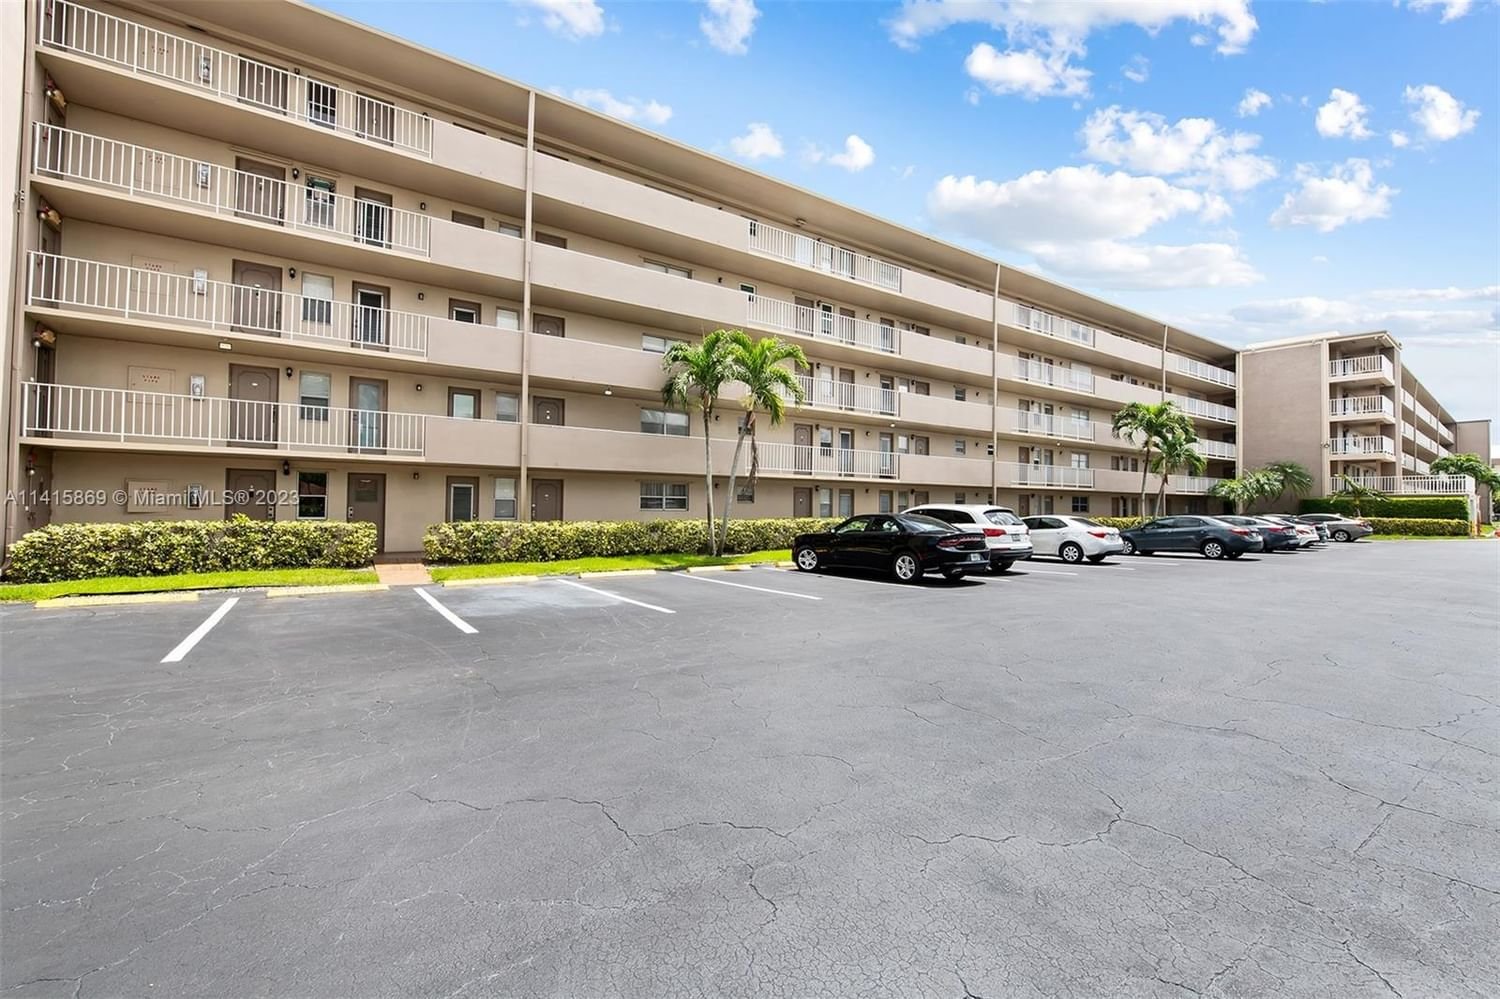 Real estate property located at 5100 Washington St #307, Broward County, Hollywood, FL